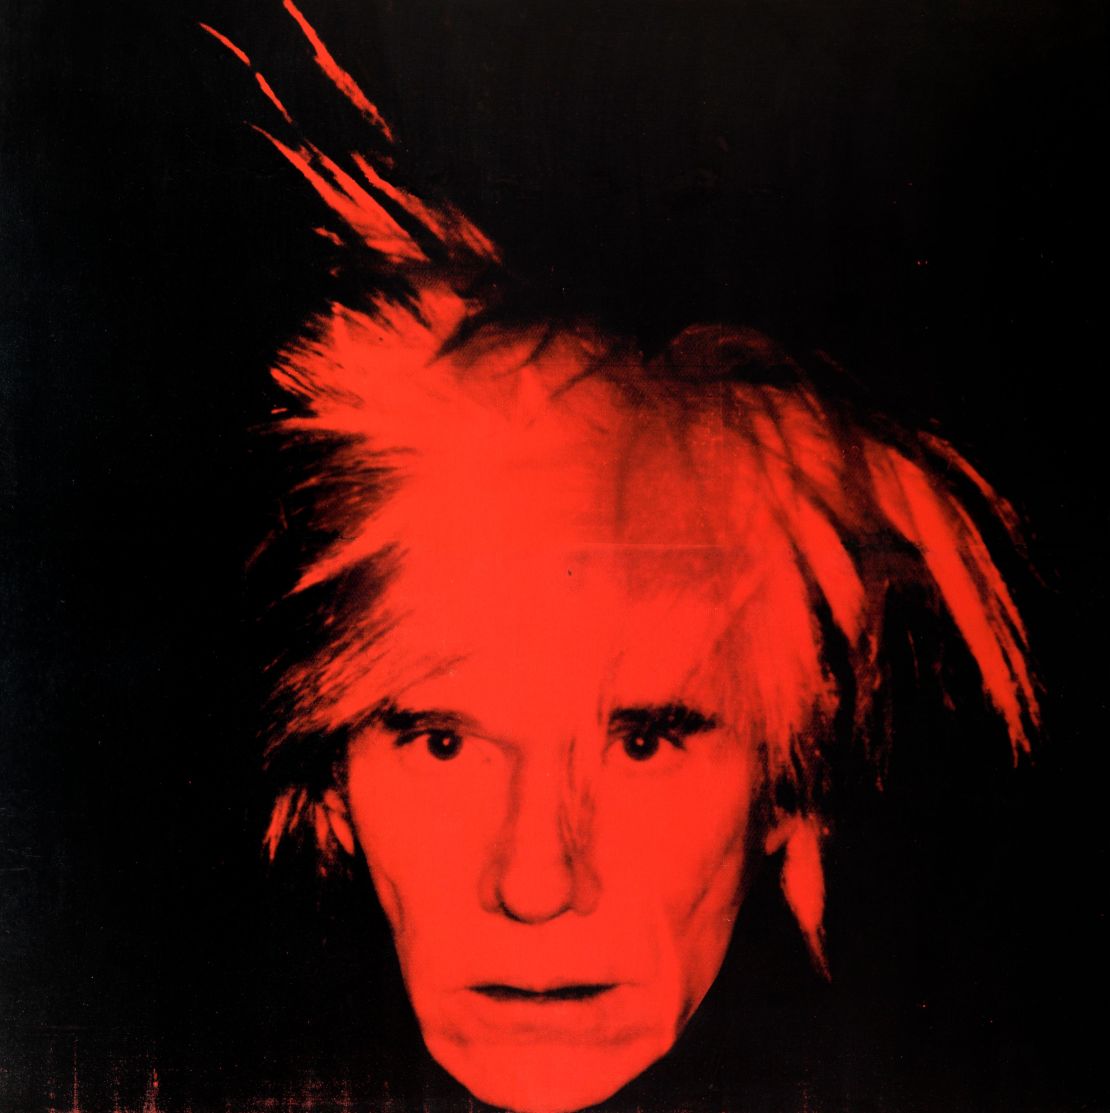 "Self Portrait," 1986, By Andy Warhol
